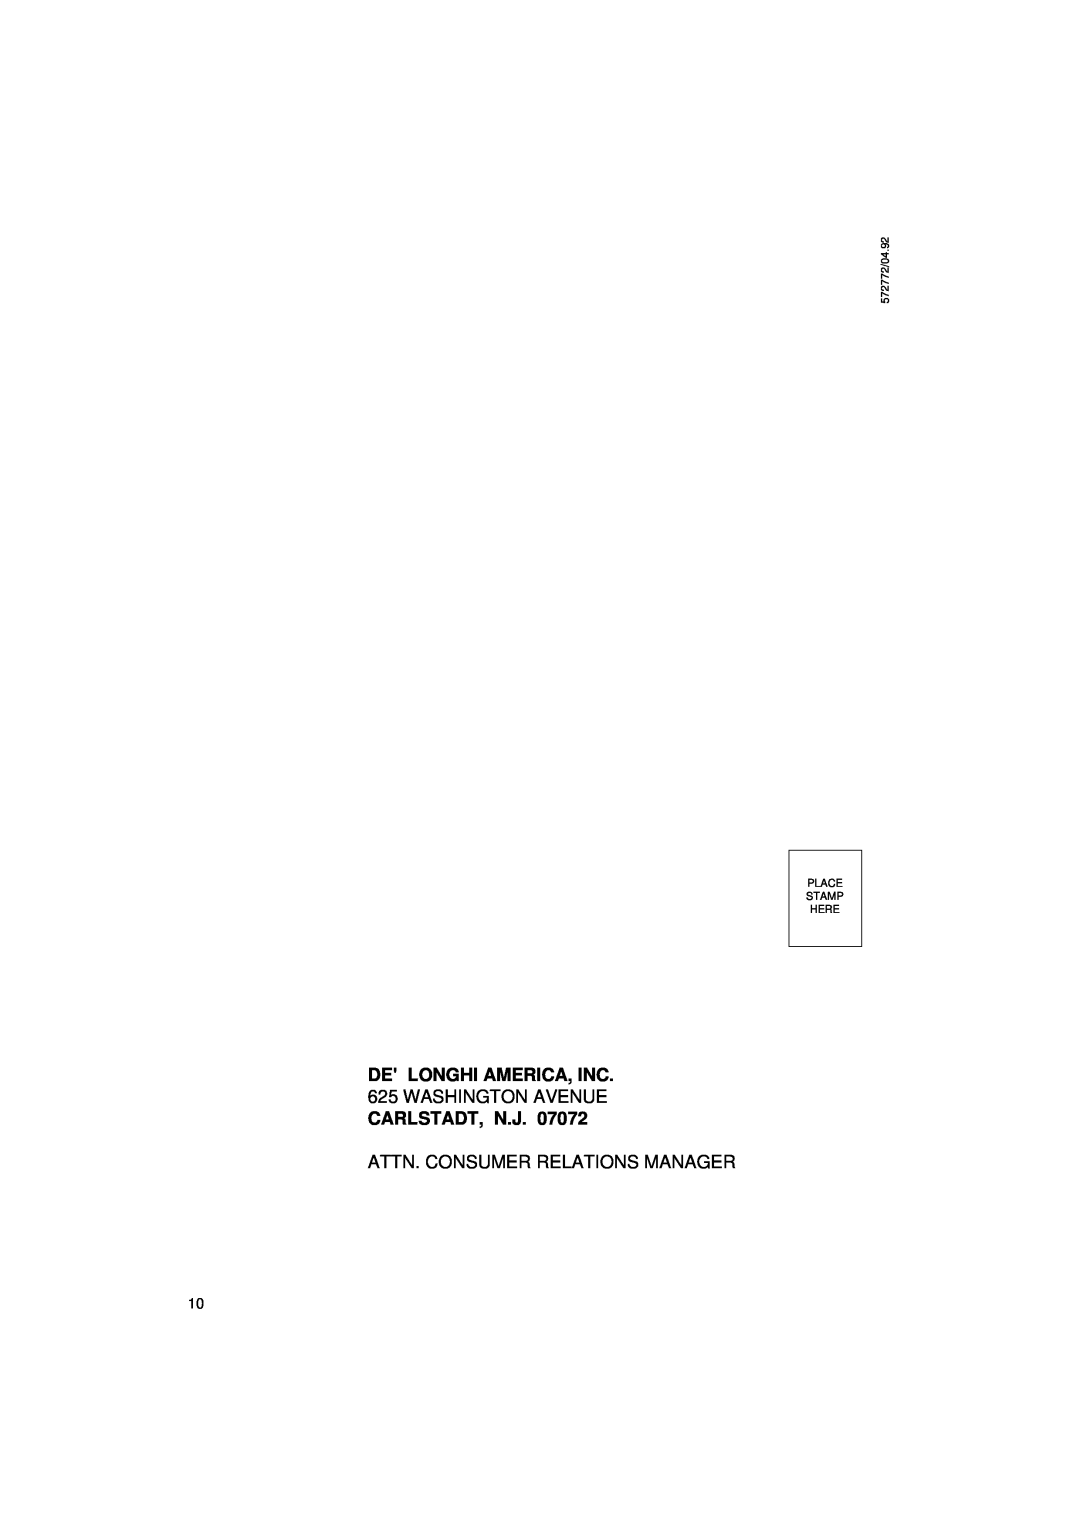 DeLonghi XU15C manual De Longhi America, Inc, Washington Avenue, Carlstadt, N.J, Attn. Consumer Relations Manager 